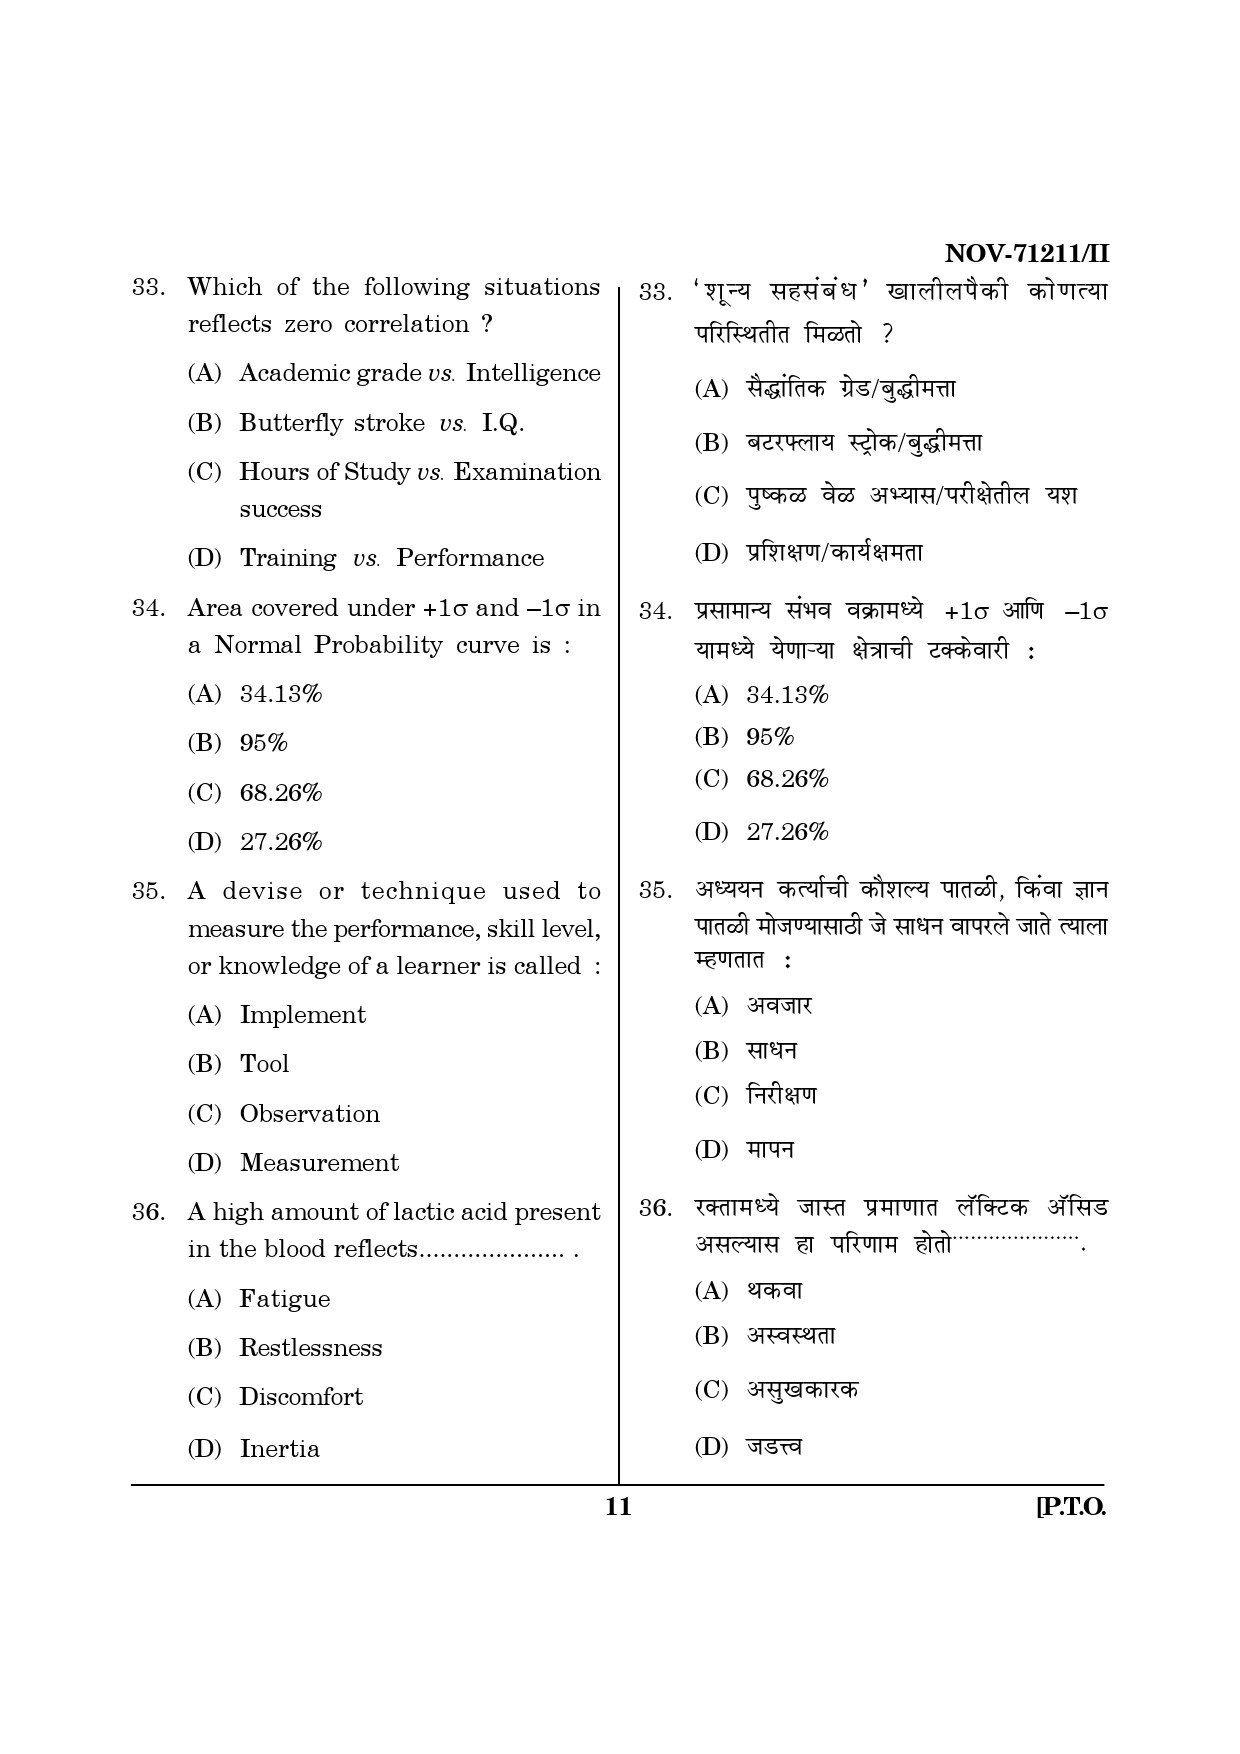 Maharashtra SET Physical Education Question Paper II November 2011 11